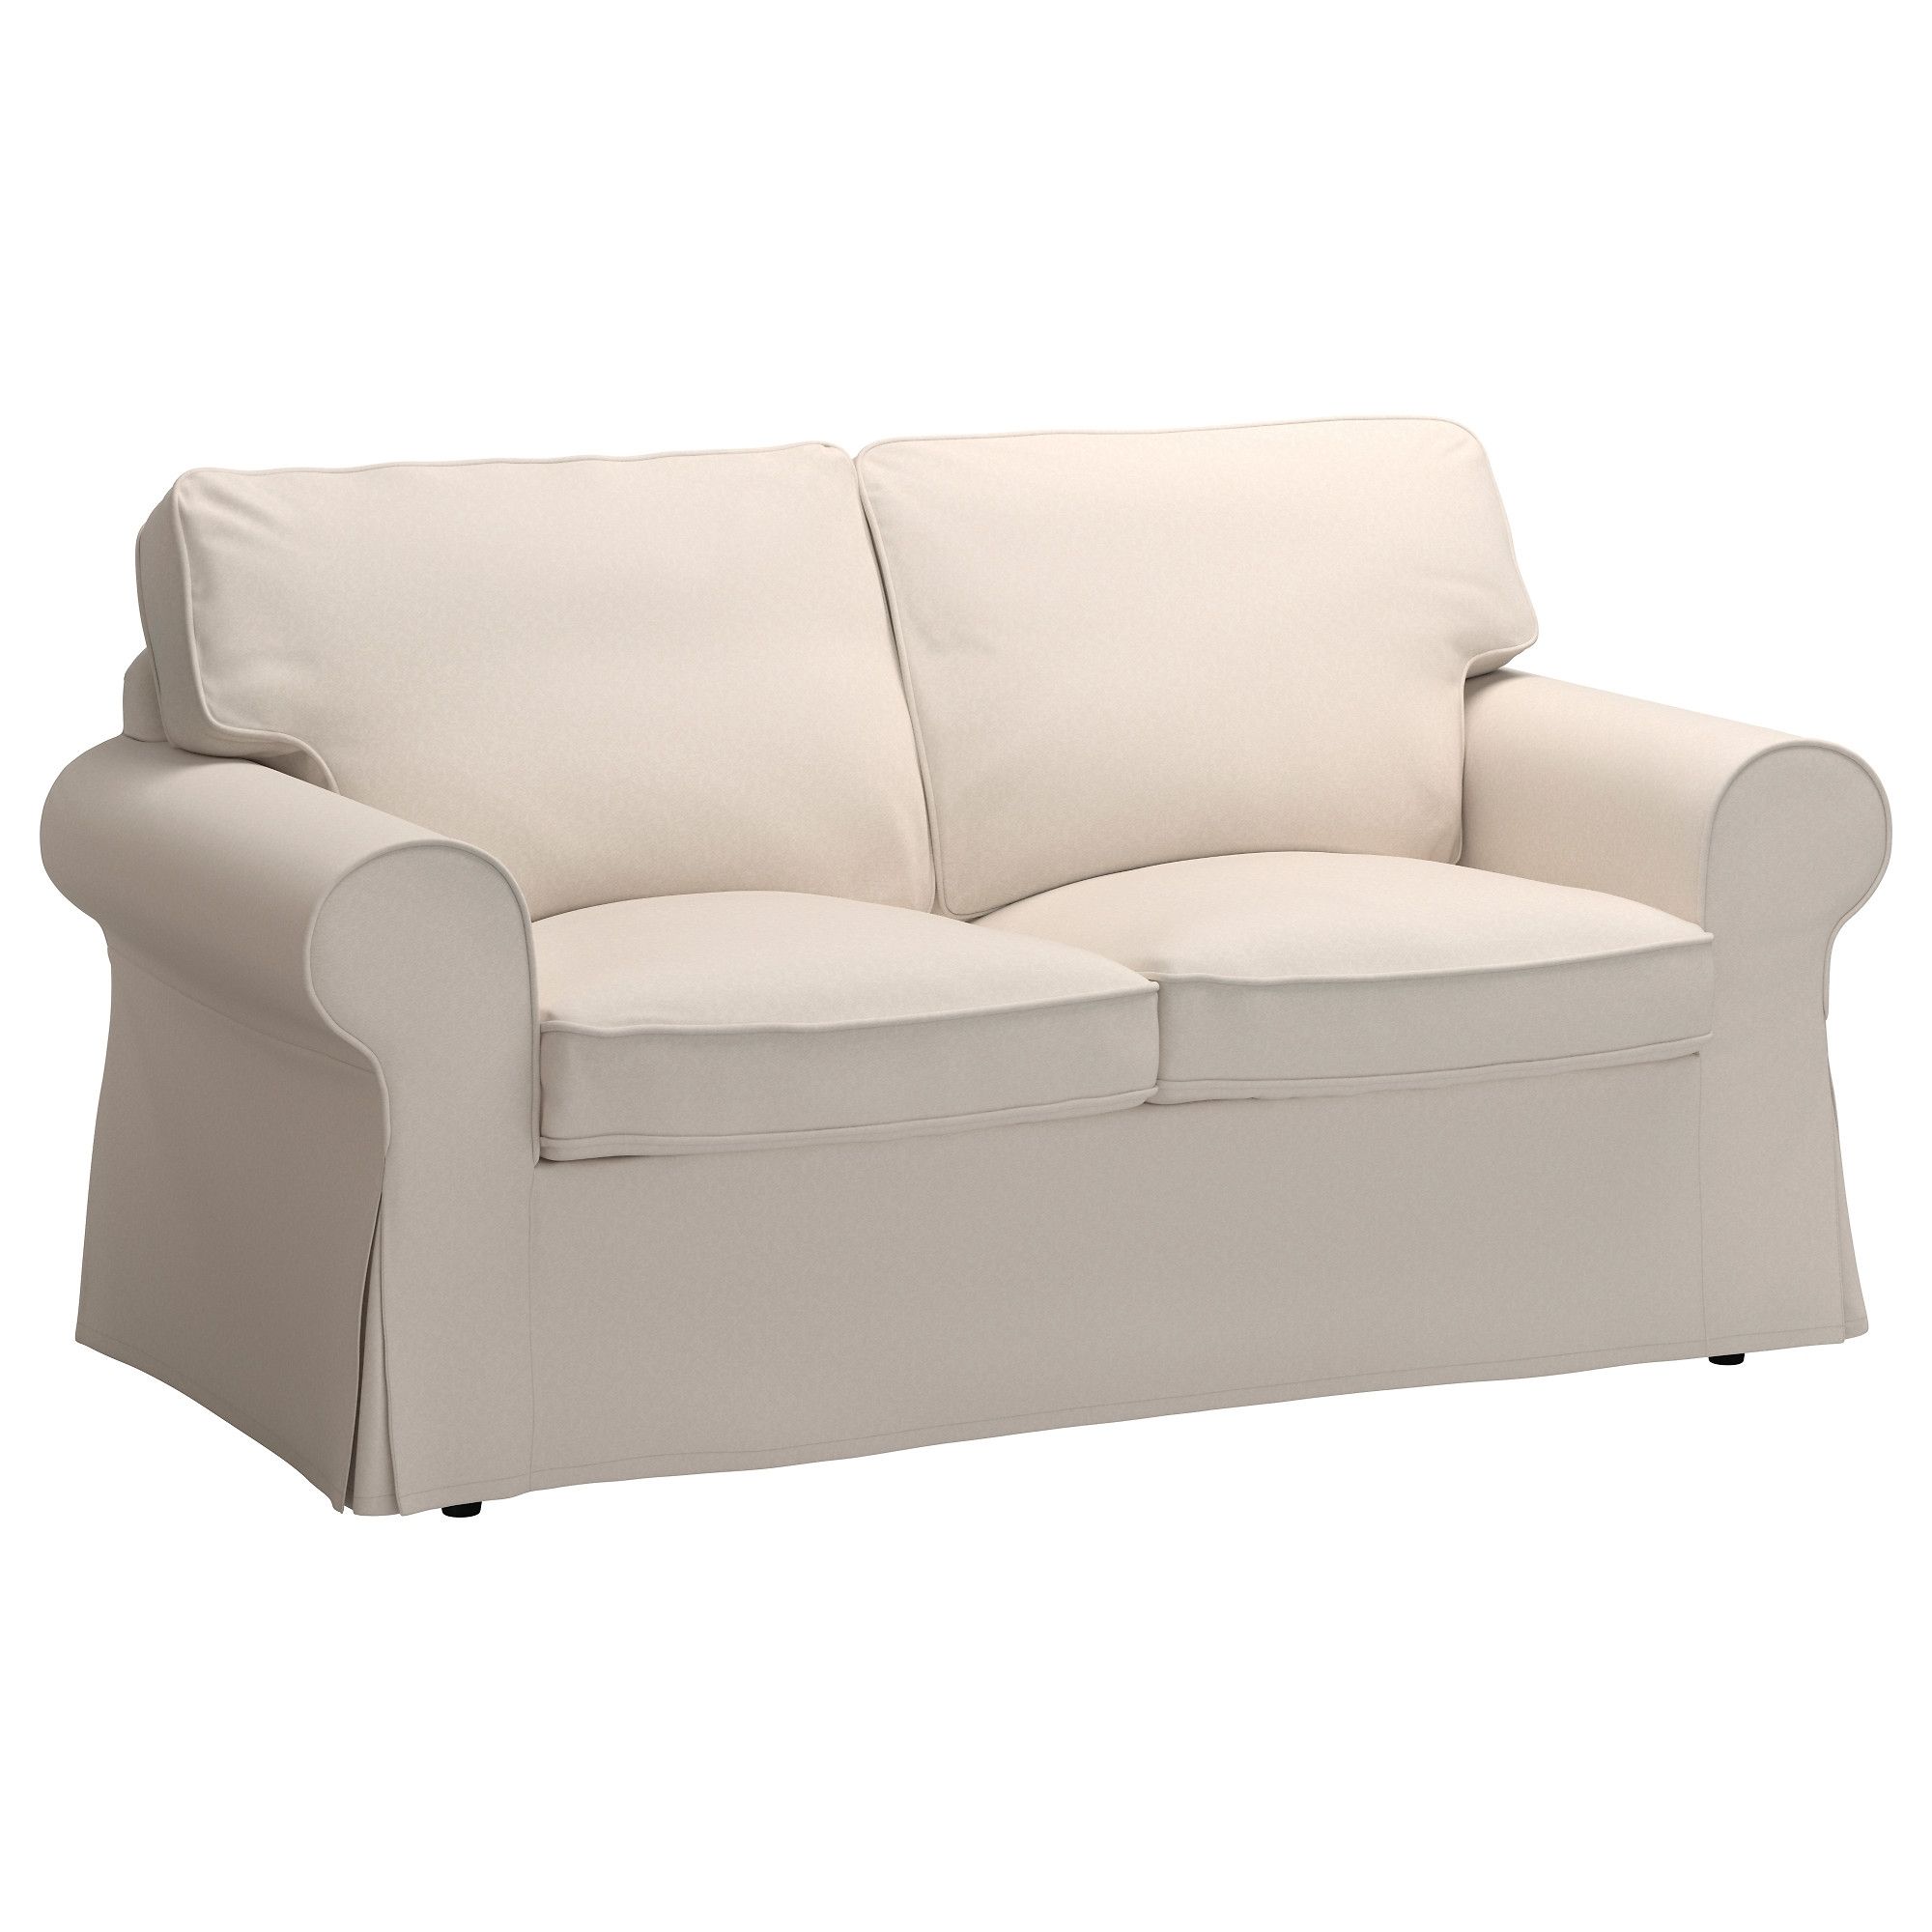 Most Popular Ektorp Two Seat Sofa – Lofallet Beige – Ikea Regarding Ikea Two Seater Sofas (View 12 of 20)